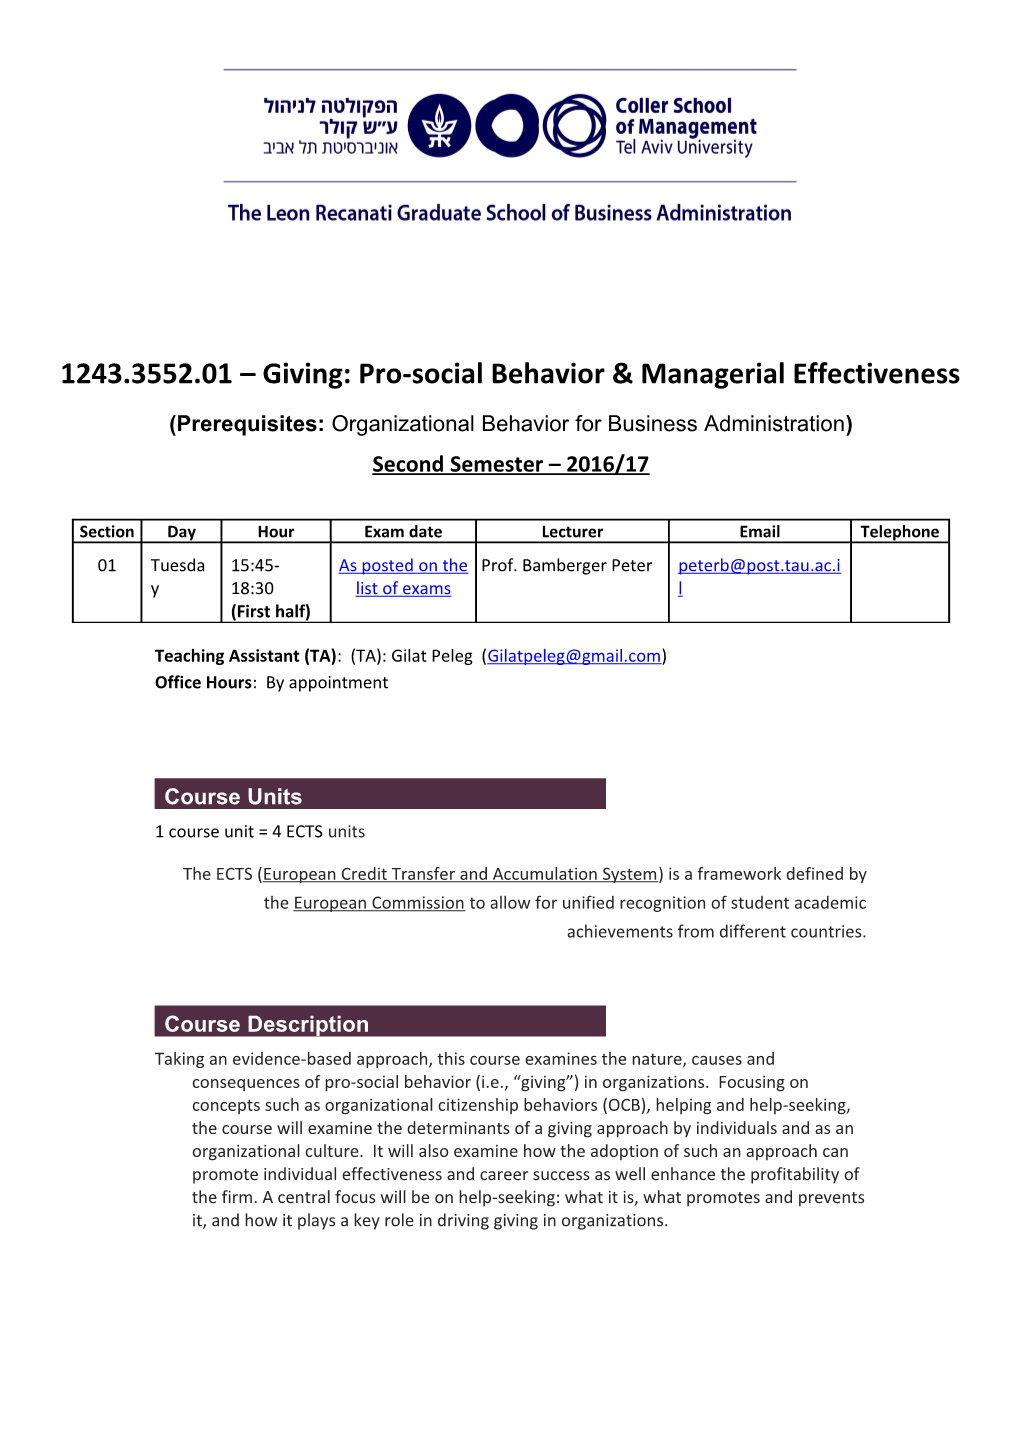 1243.3552.01 Giving: Pro-Social Behavior & Managerial Effectiveness